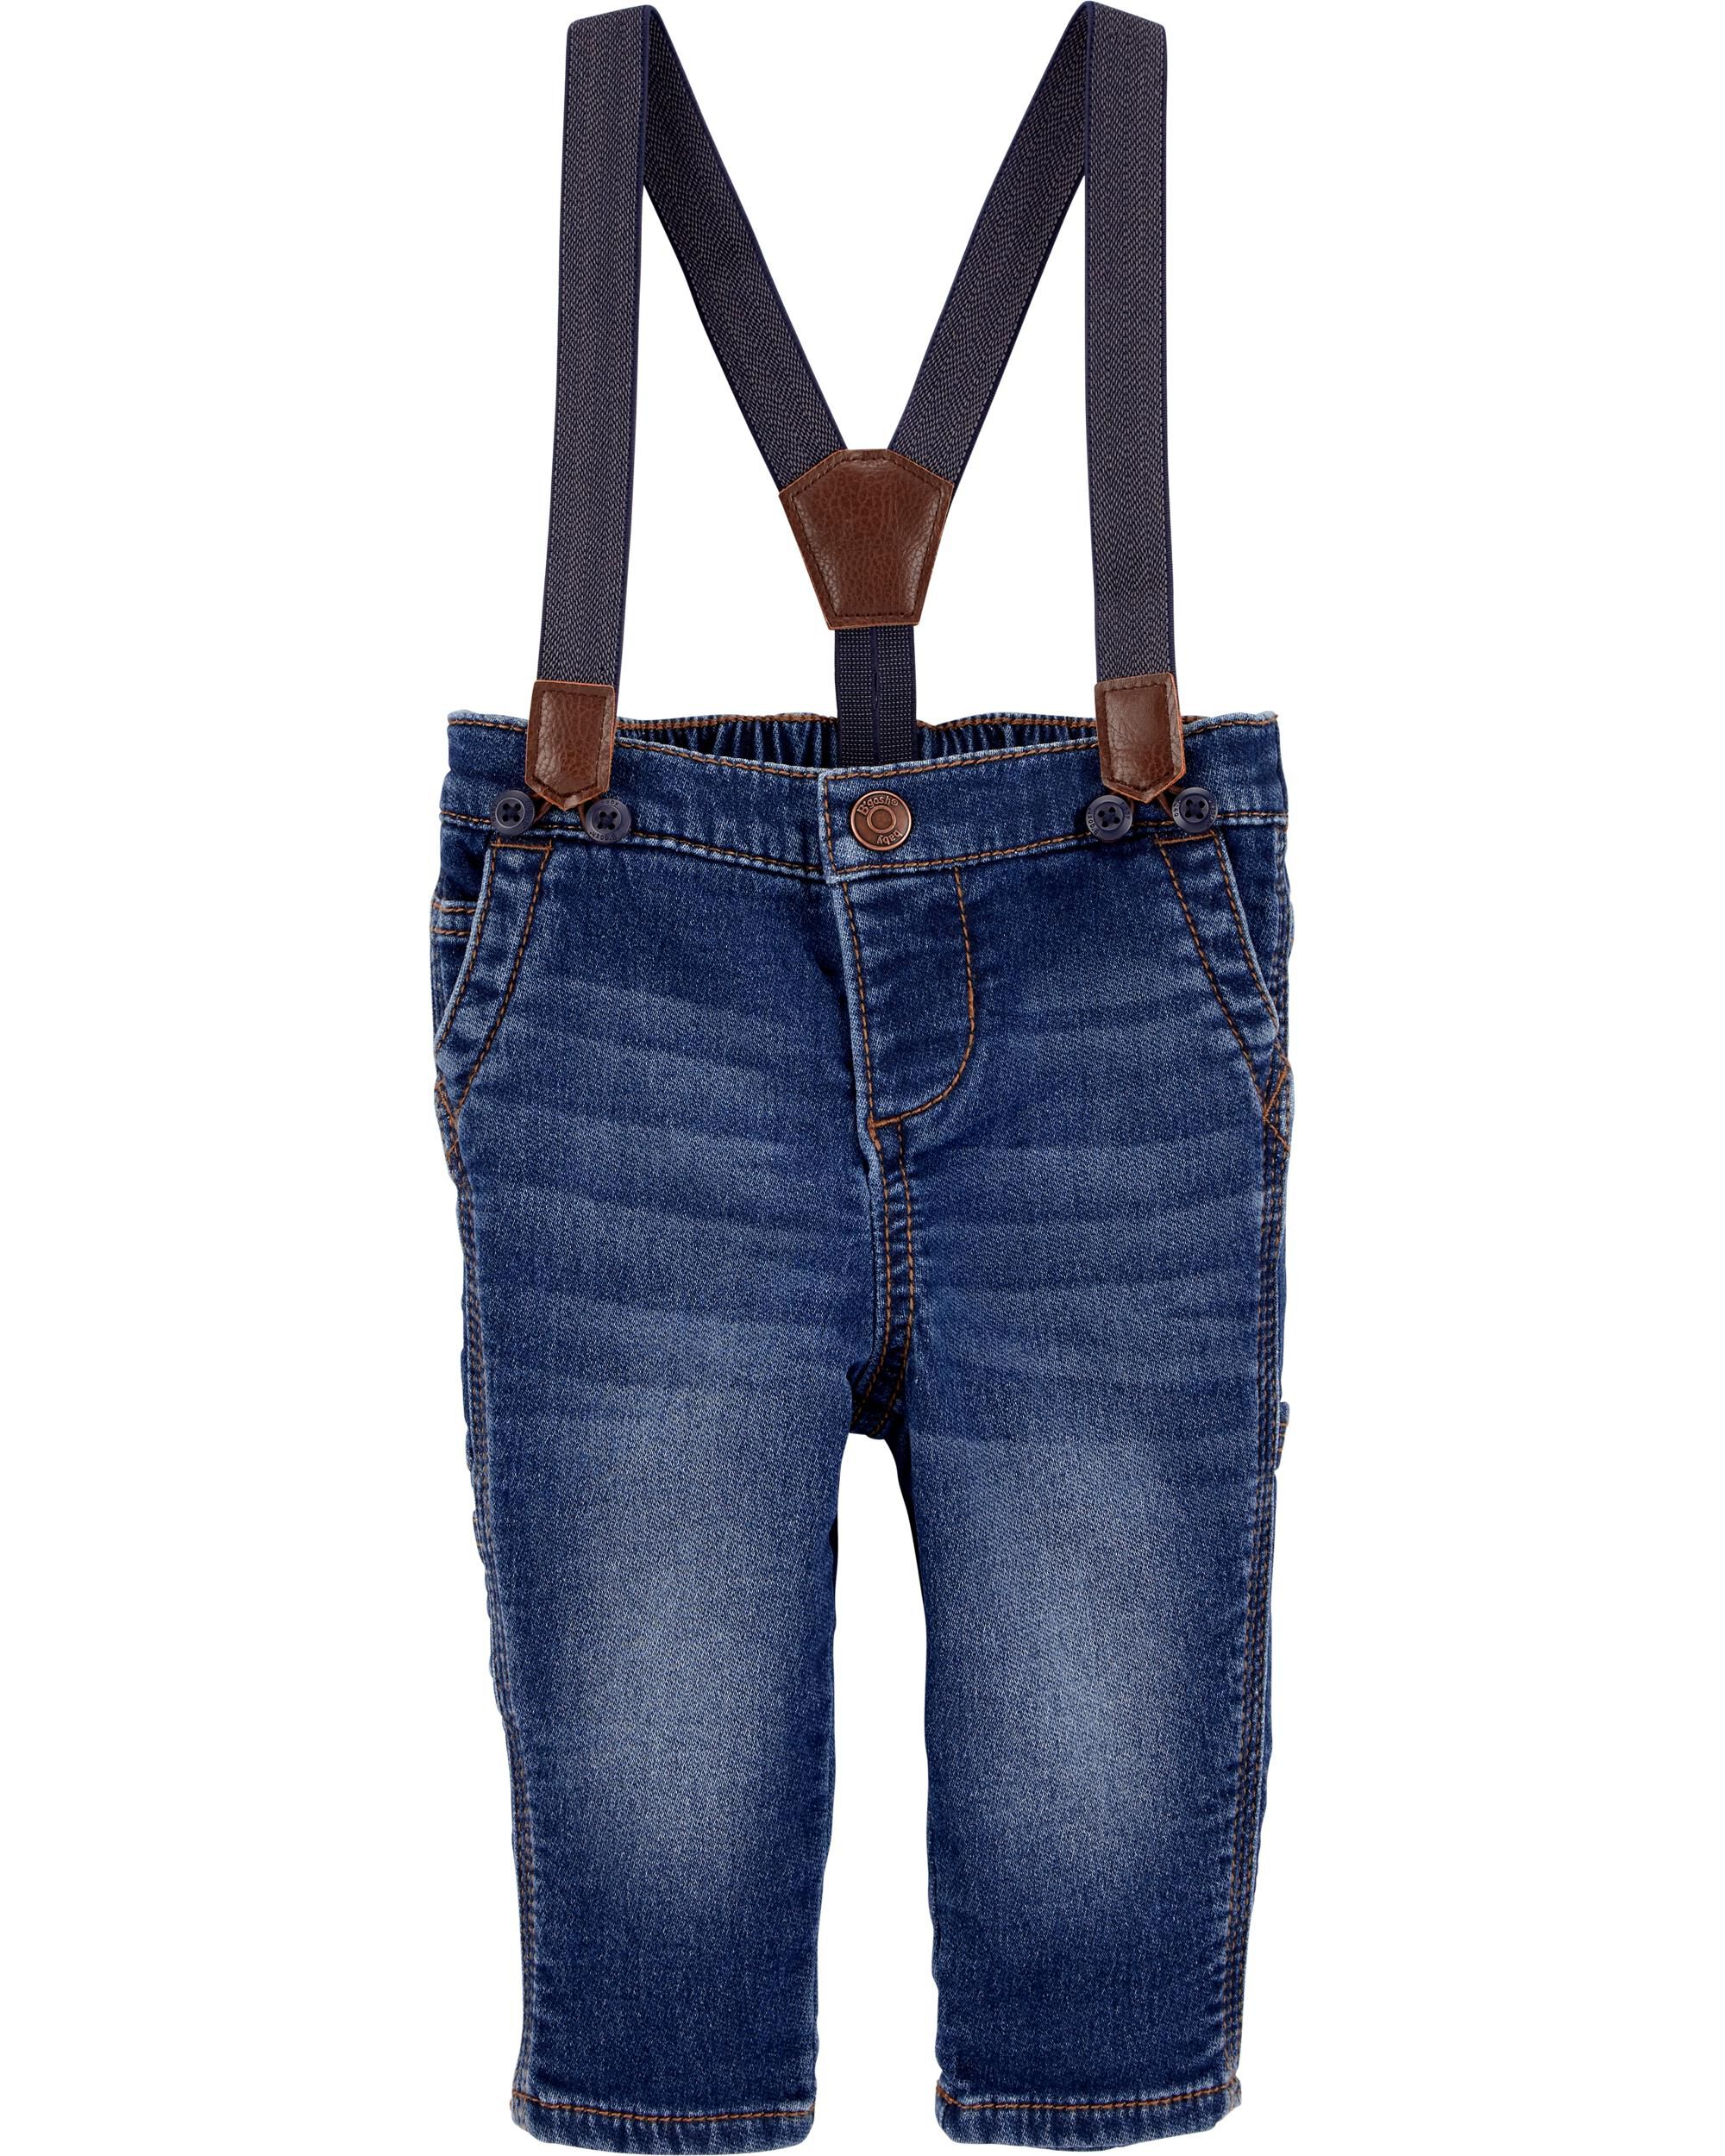 Carters Knit Denim Suspender Jeans